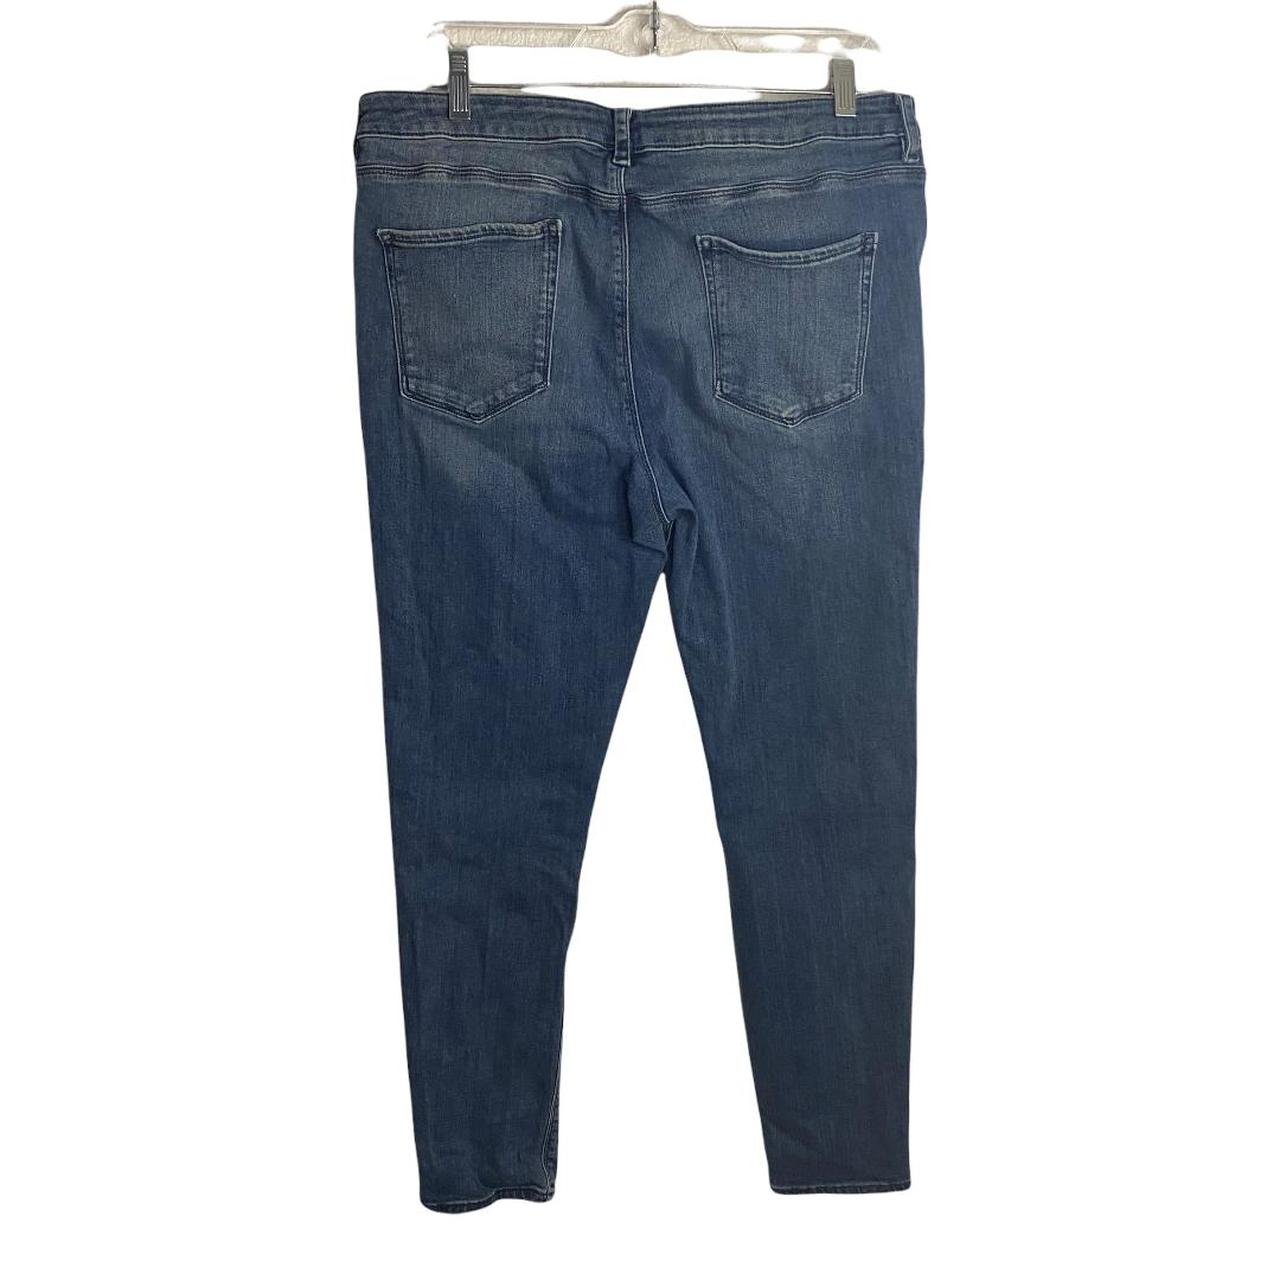 Product Image 2 - ASOS Denim Jeans Size 34